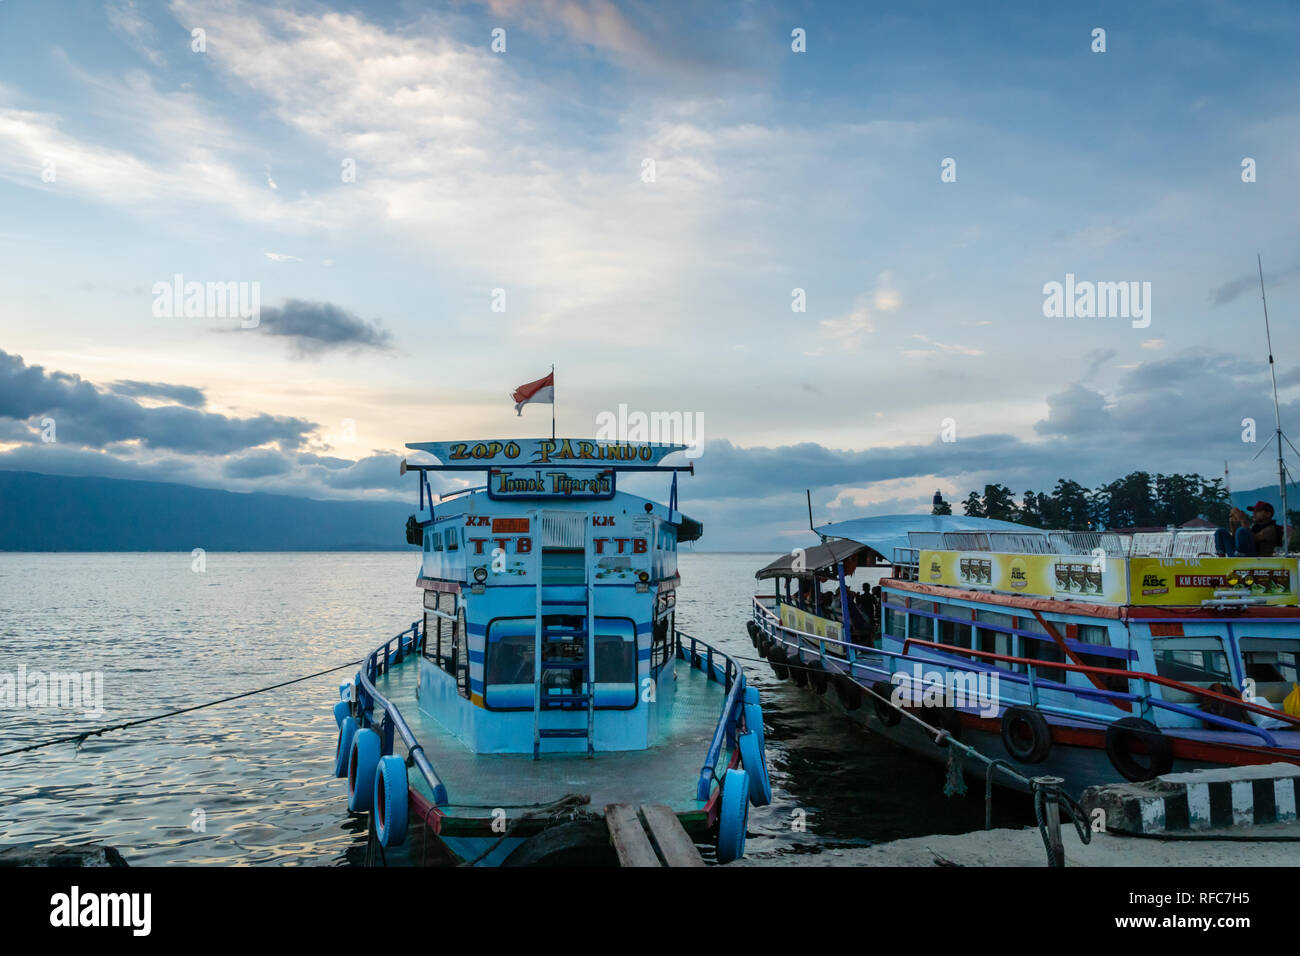 Lake Toba, Indonesia - January 2018: Ferries for passengers on Lake Toba at sunset, North Sumatra Indonesia. Stock Photo